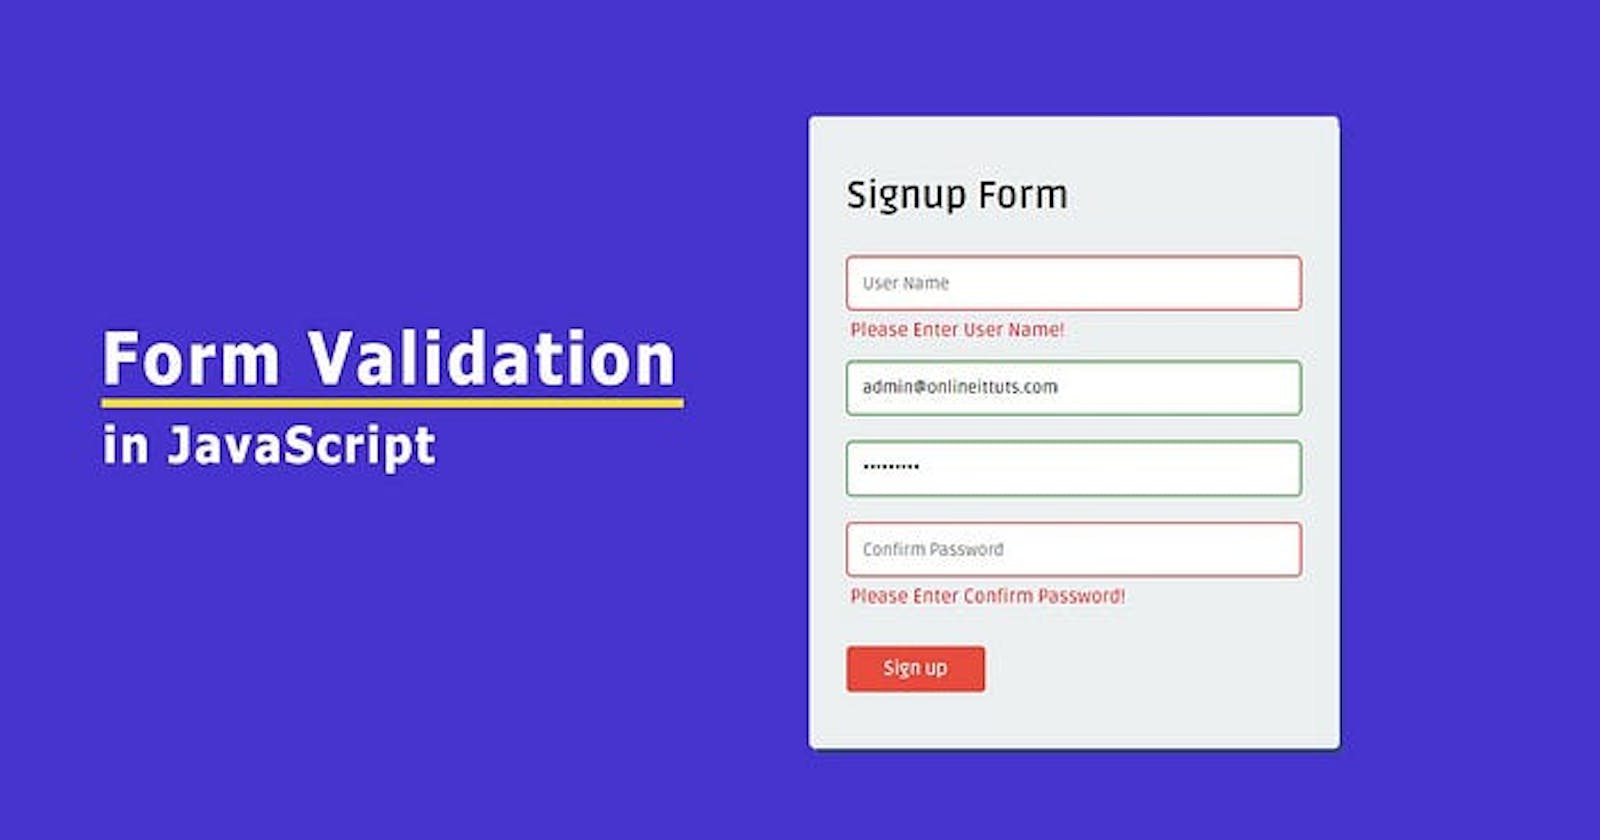 Form Validation in JavaScript